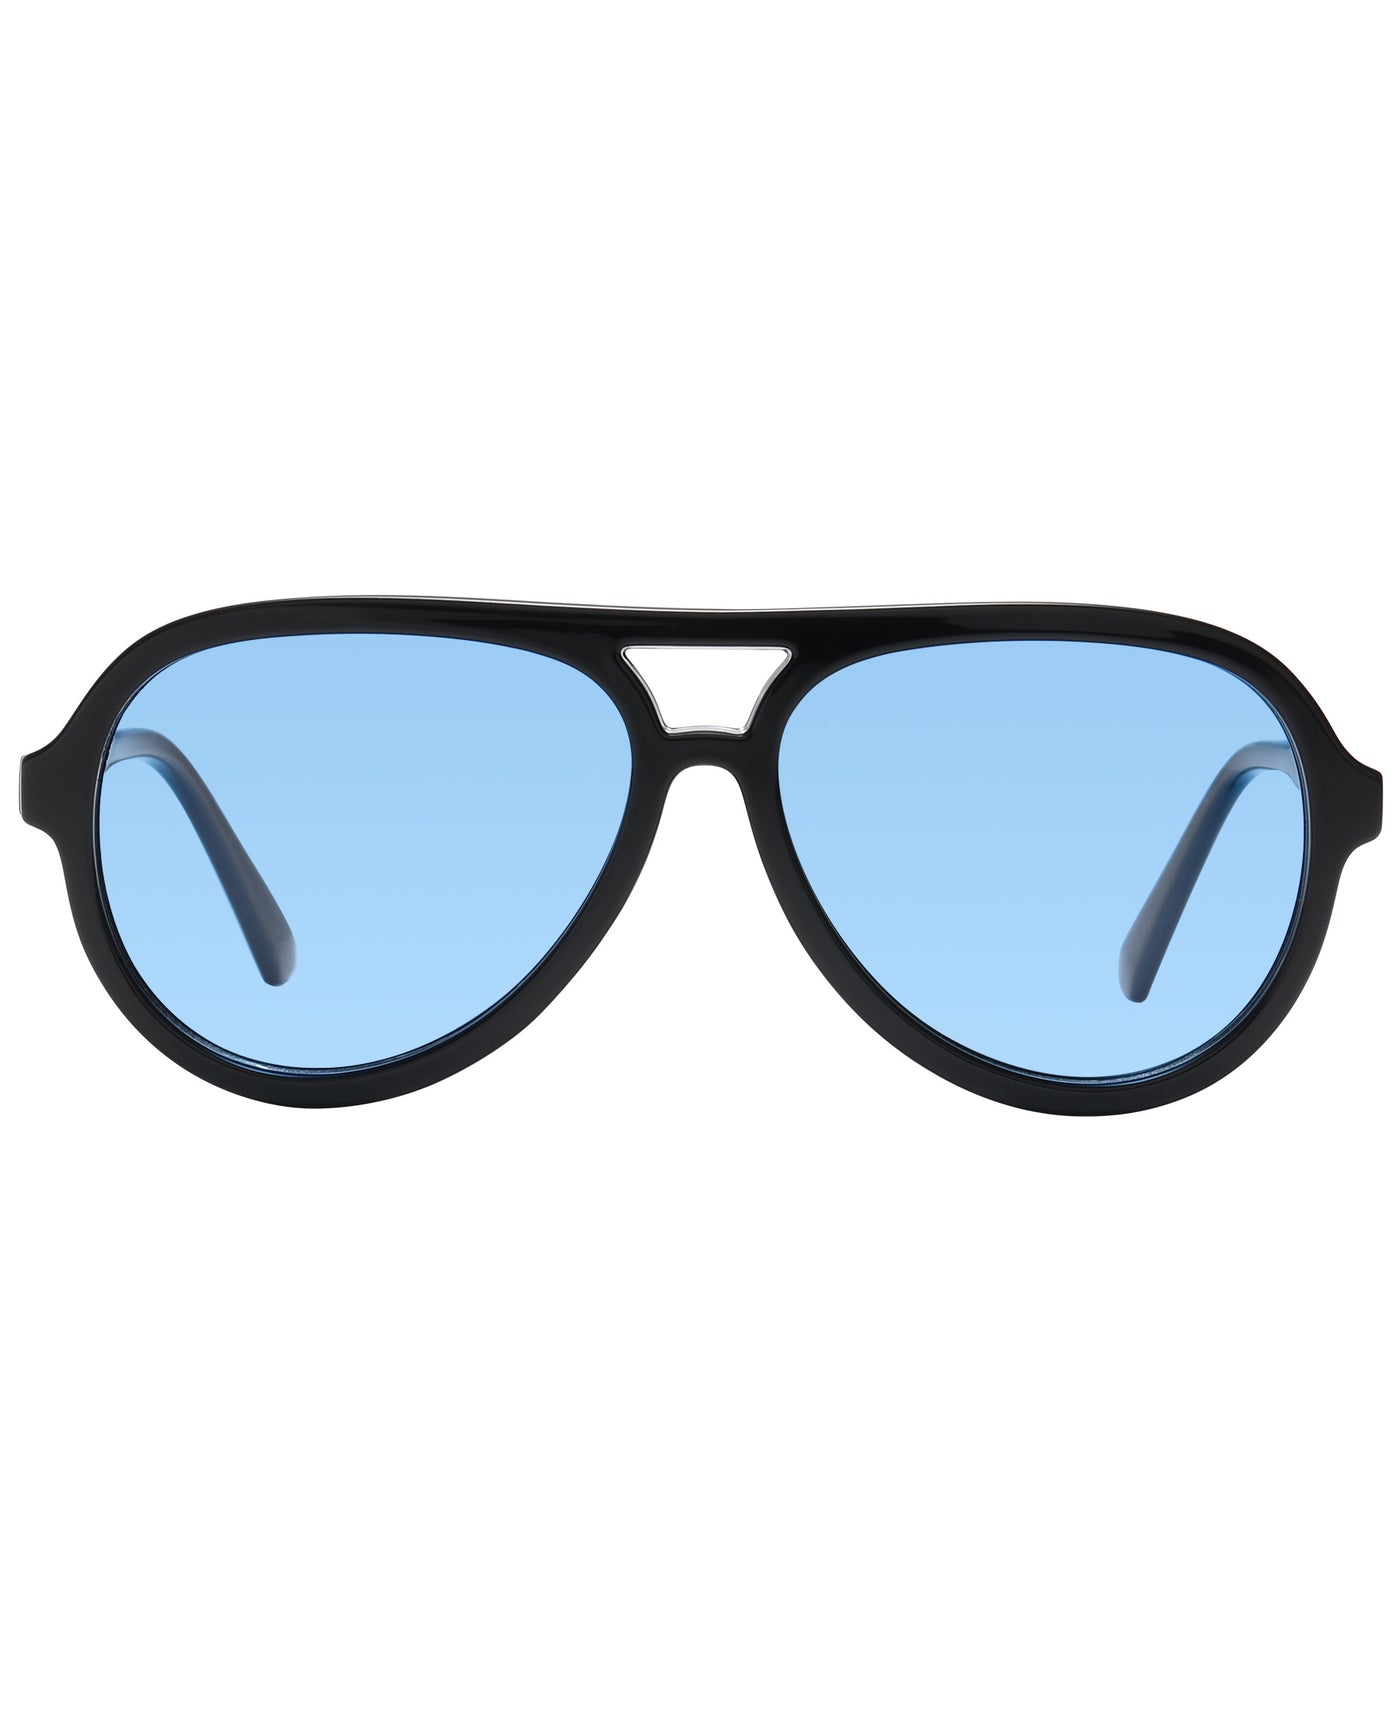 DUCO GLASSES-The right kind of shady DUCO Retro Vintage Polarized Sunglasses Classic Aviator Sunglasses for Women Men Double Bridge Vintage Shades DC1208 Duco 